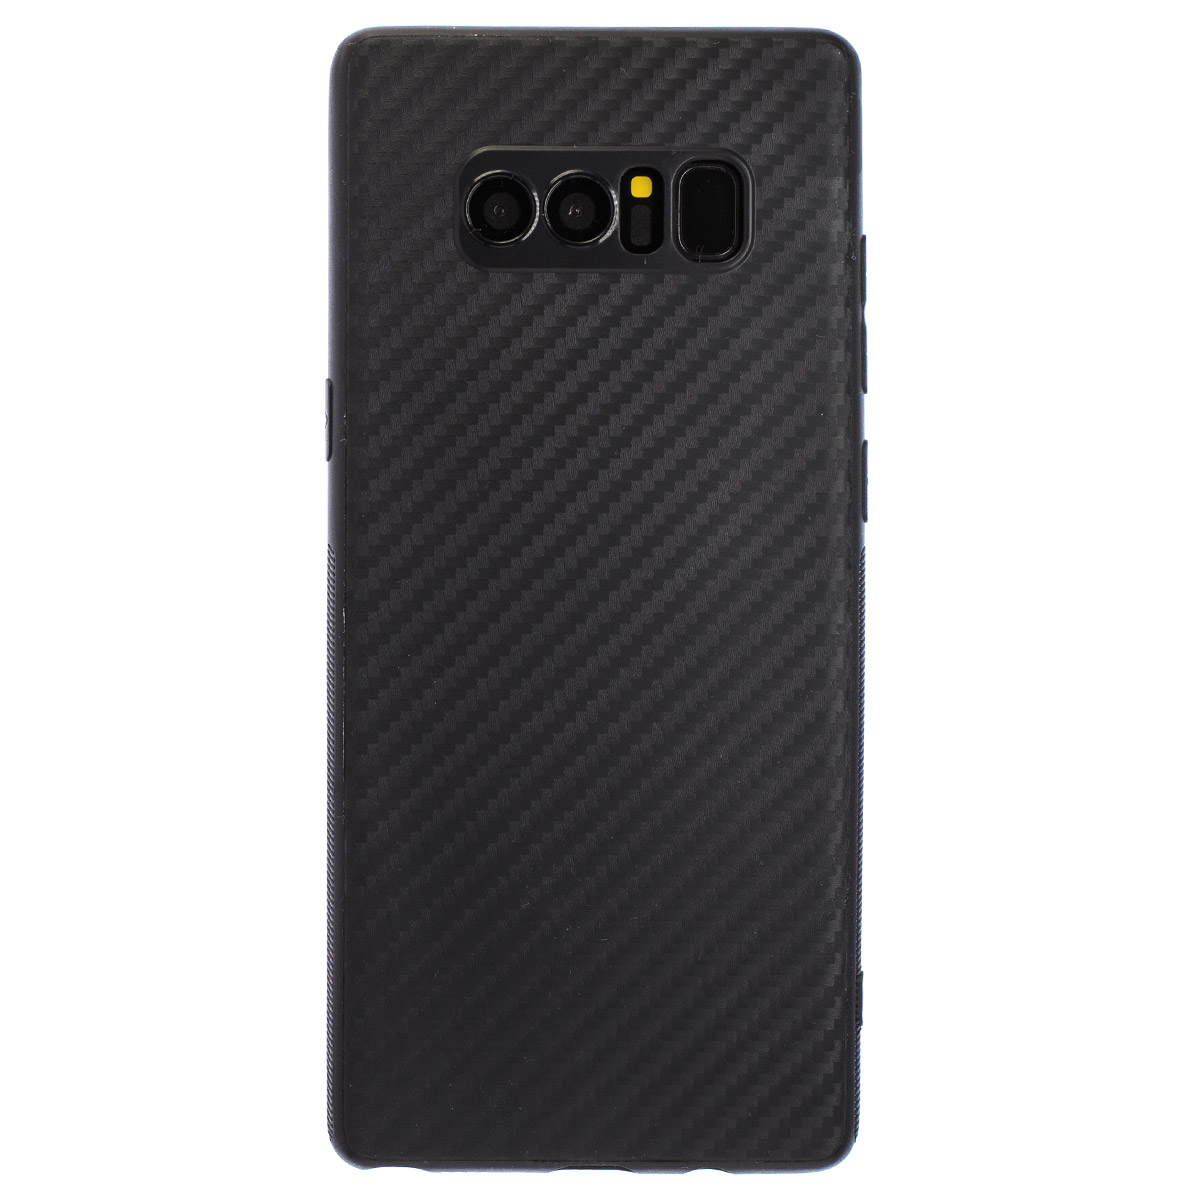 Husa Silicon Samsung Galaxy Note 8, Negru Carbon thumb